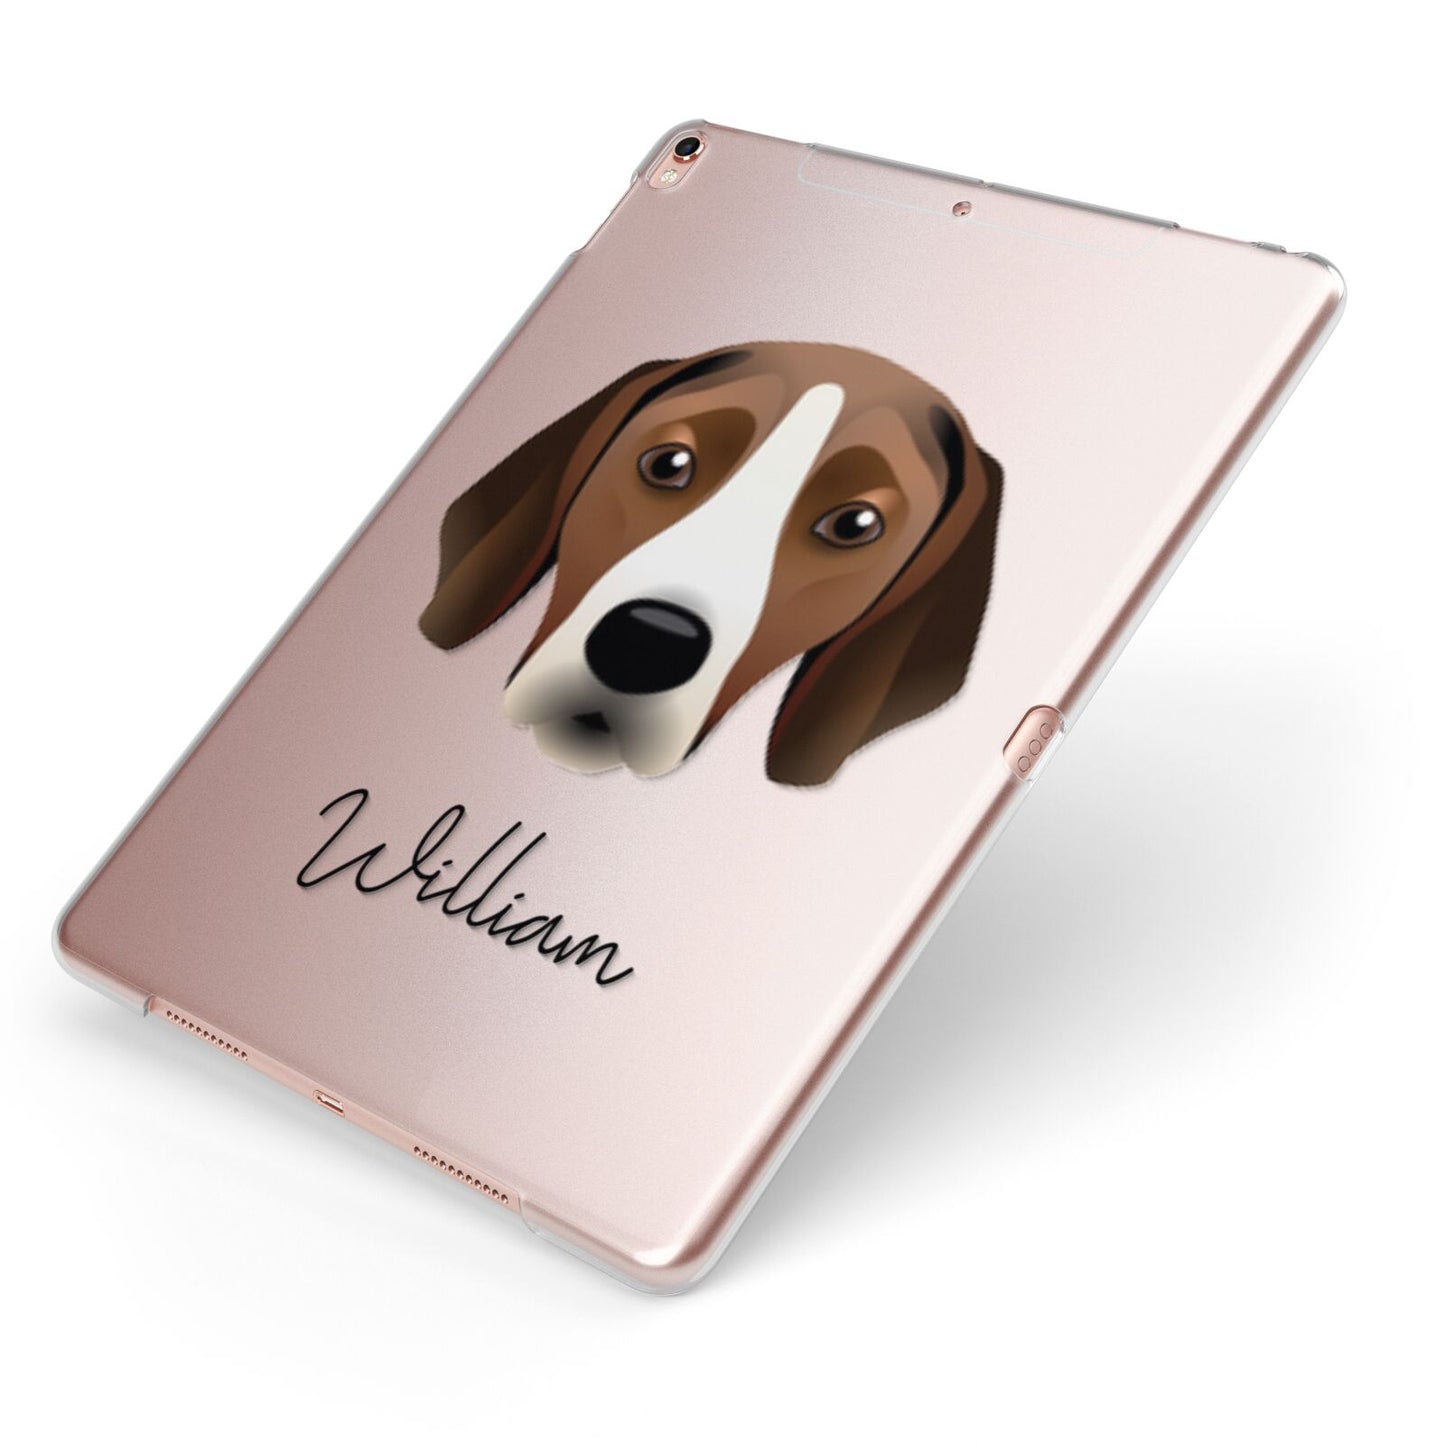 Hamiltonstovare Personalised Apple iPad Case on Rose Gold iPad Side View